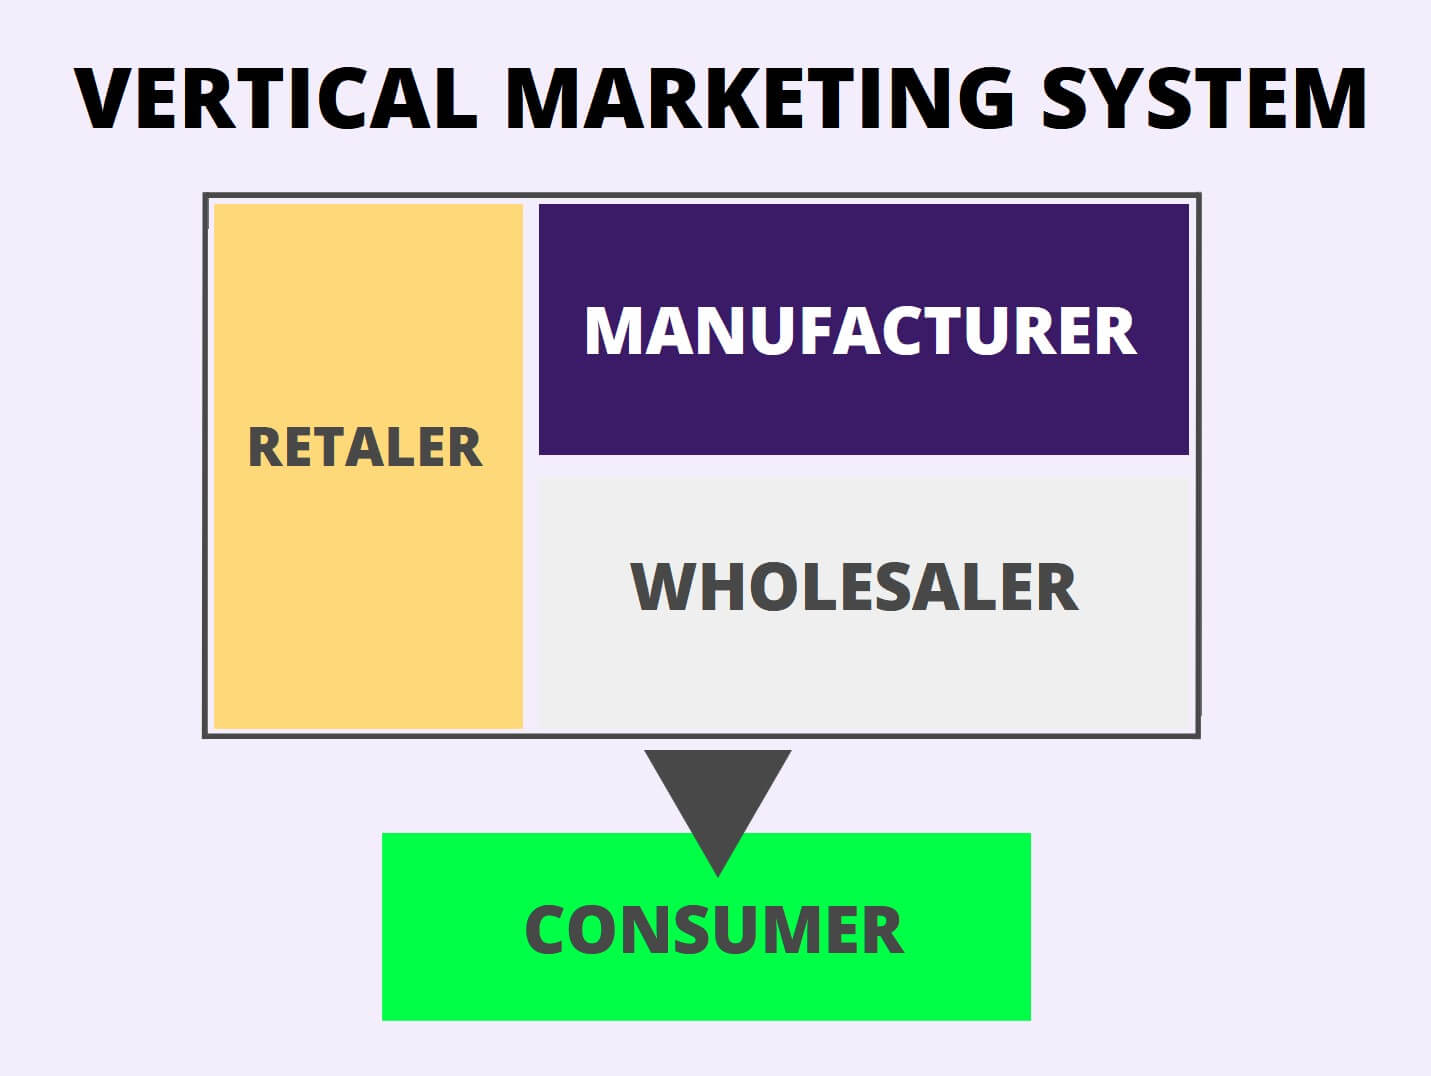 Vertical marketing system definition